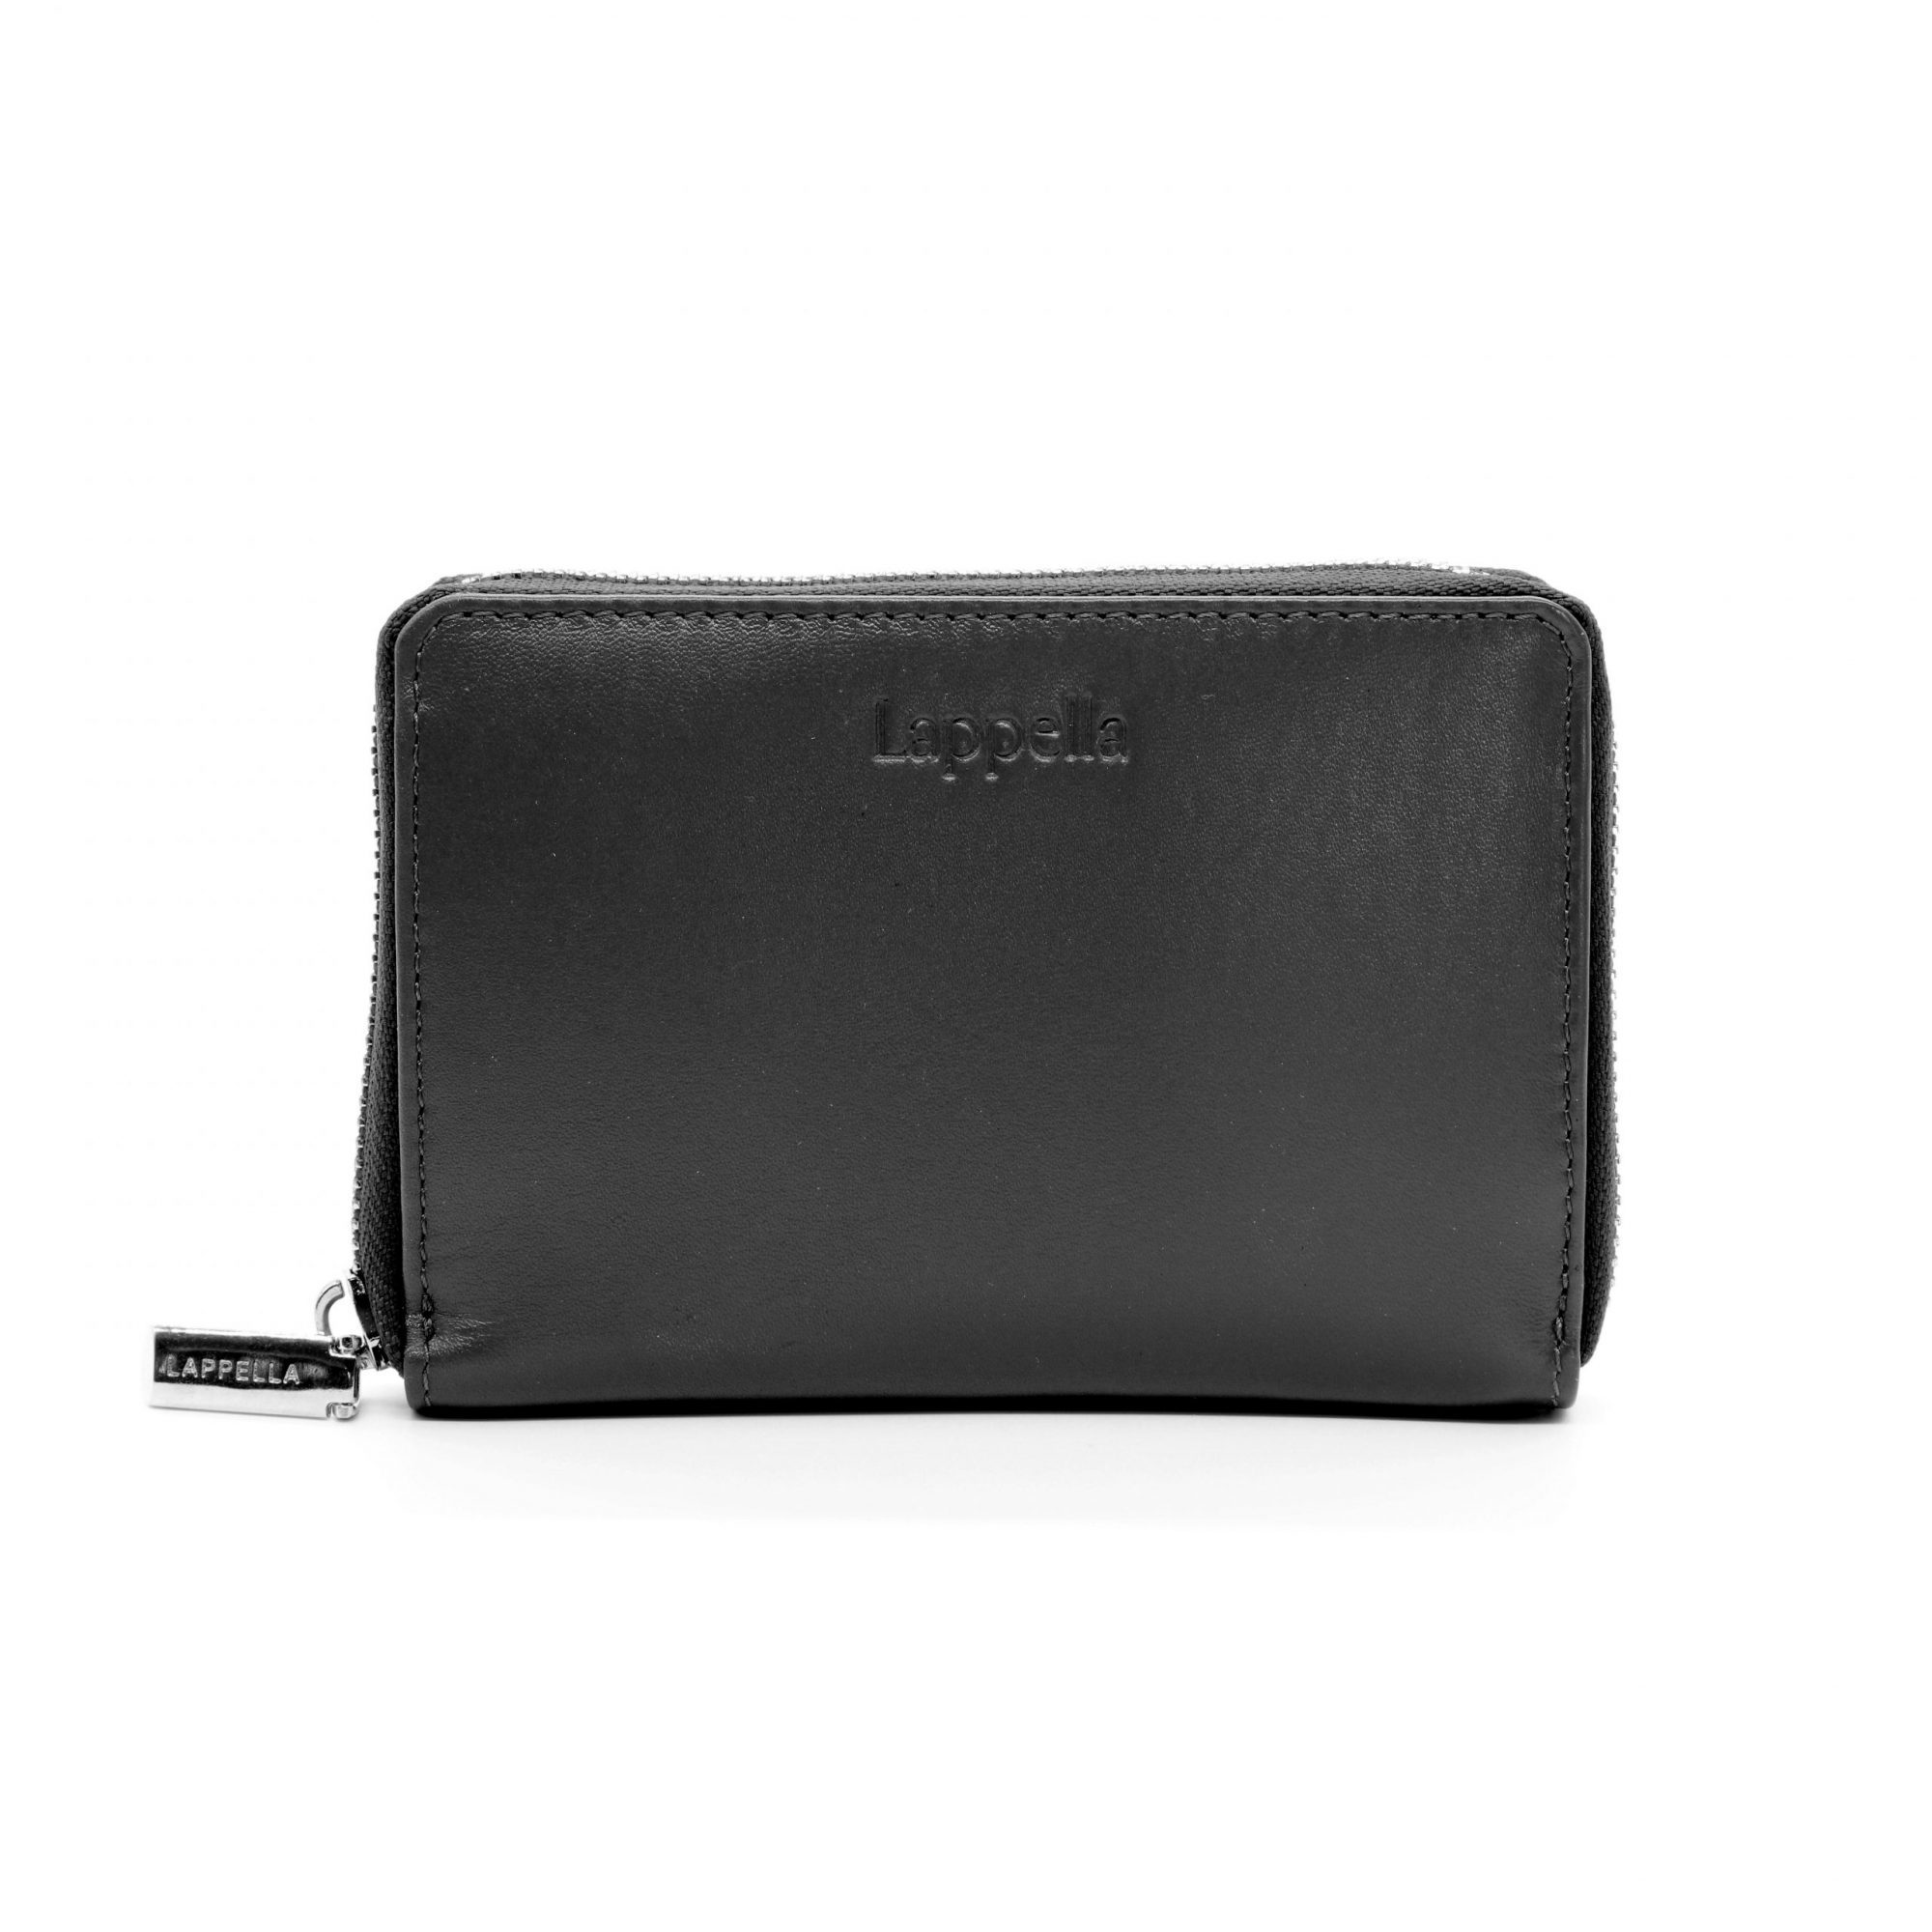 Lappella Elisia sip round purse in soft luxury leather in black.